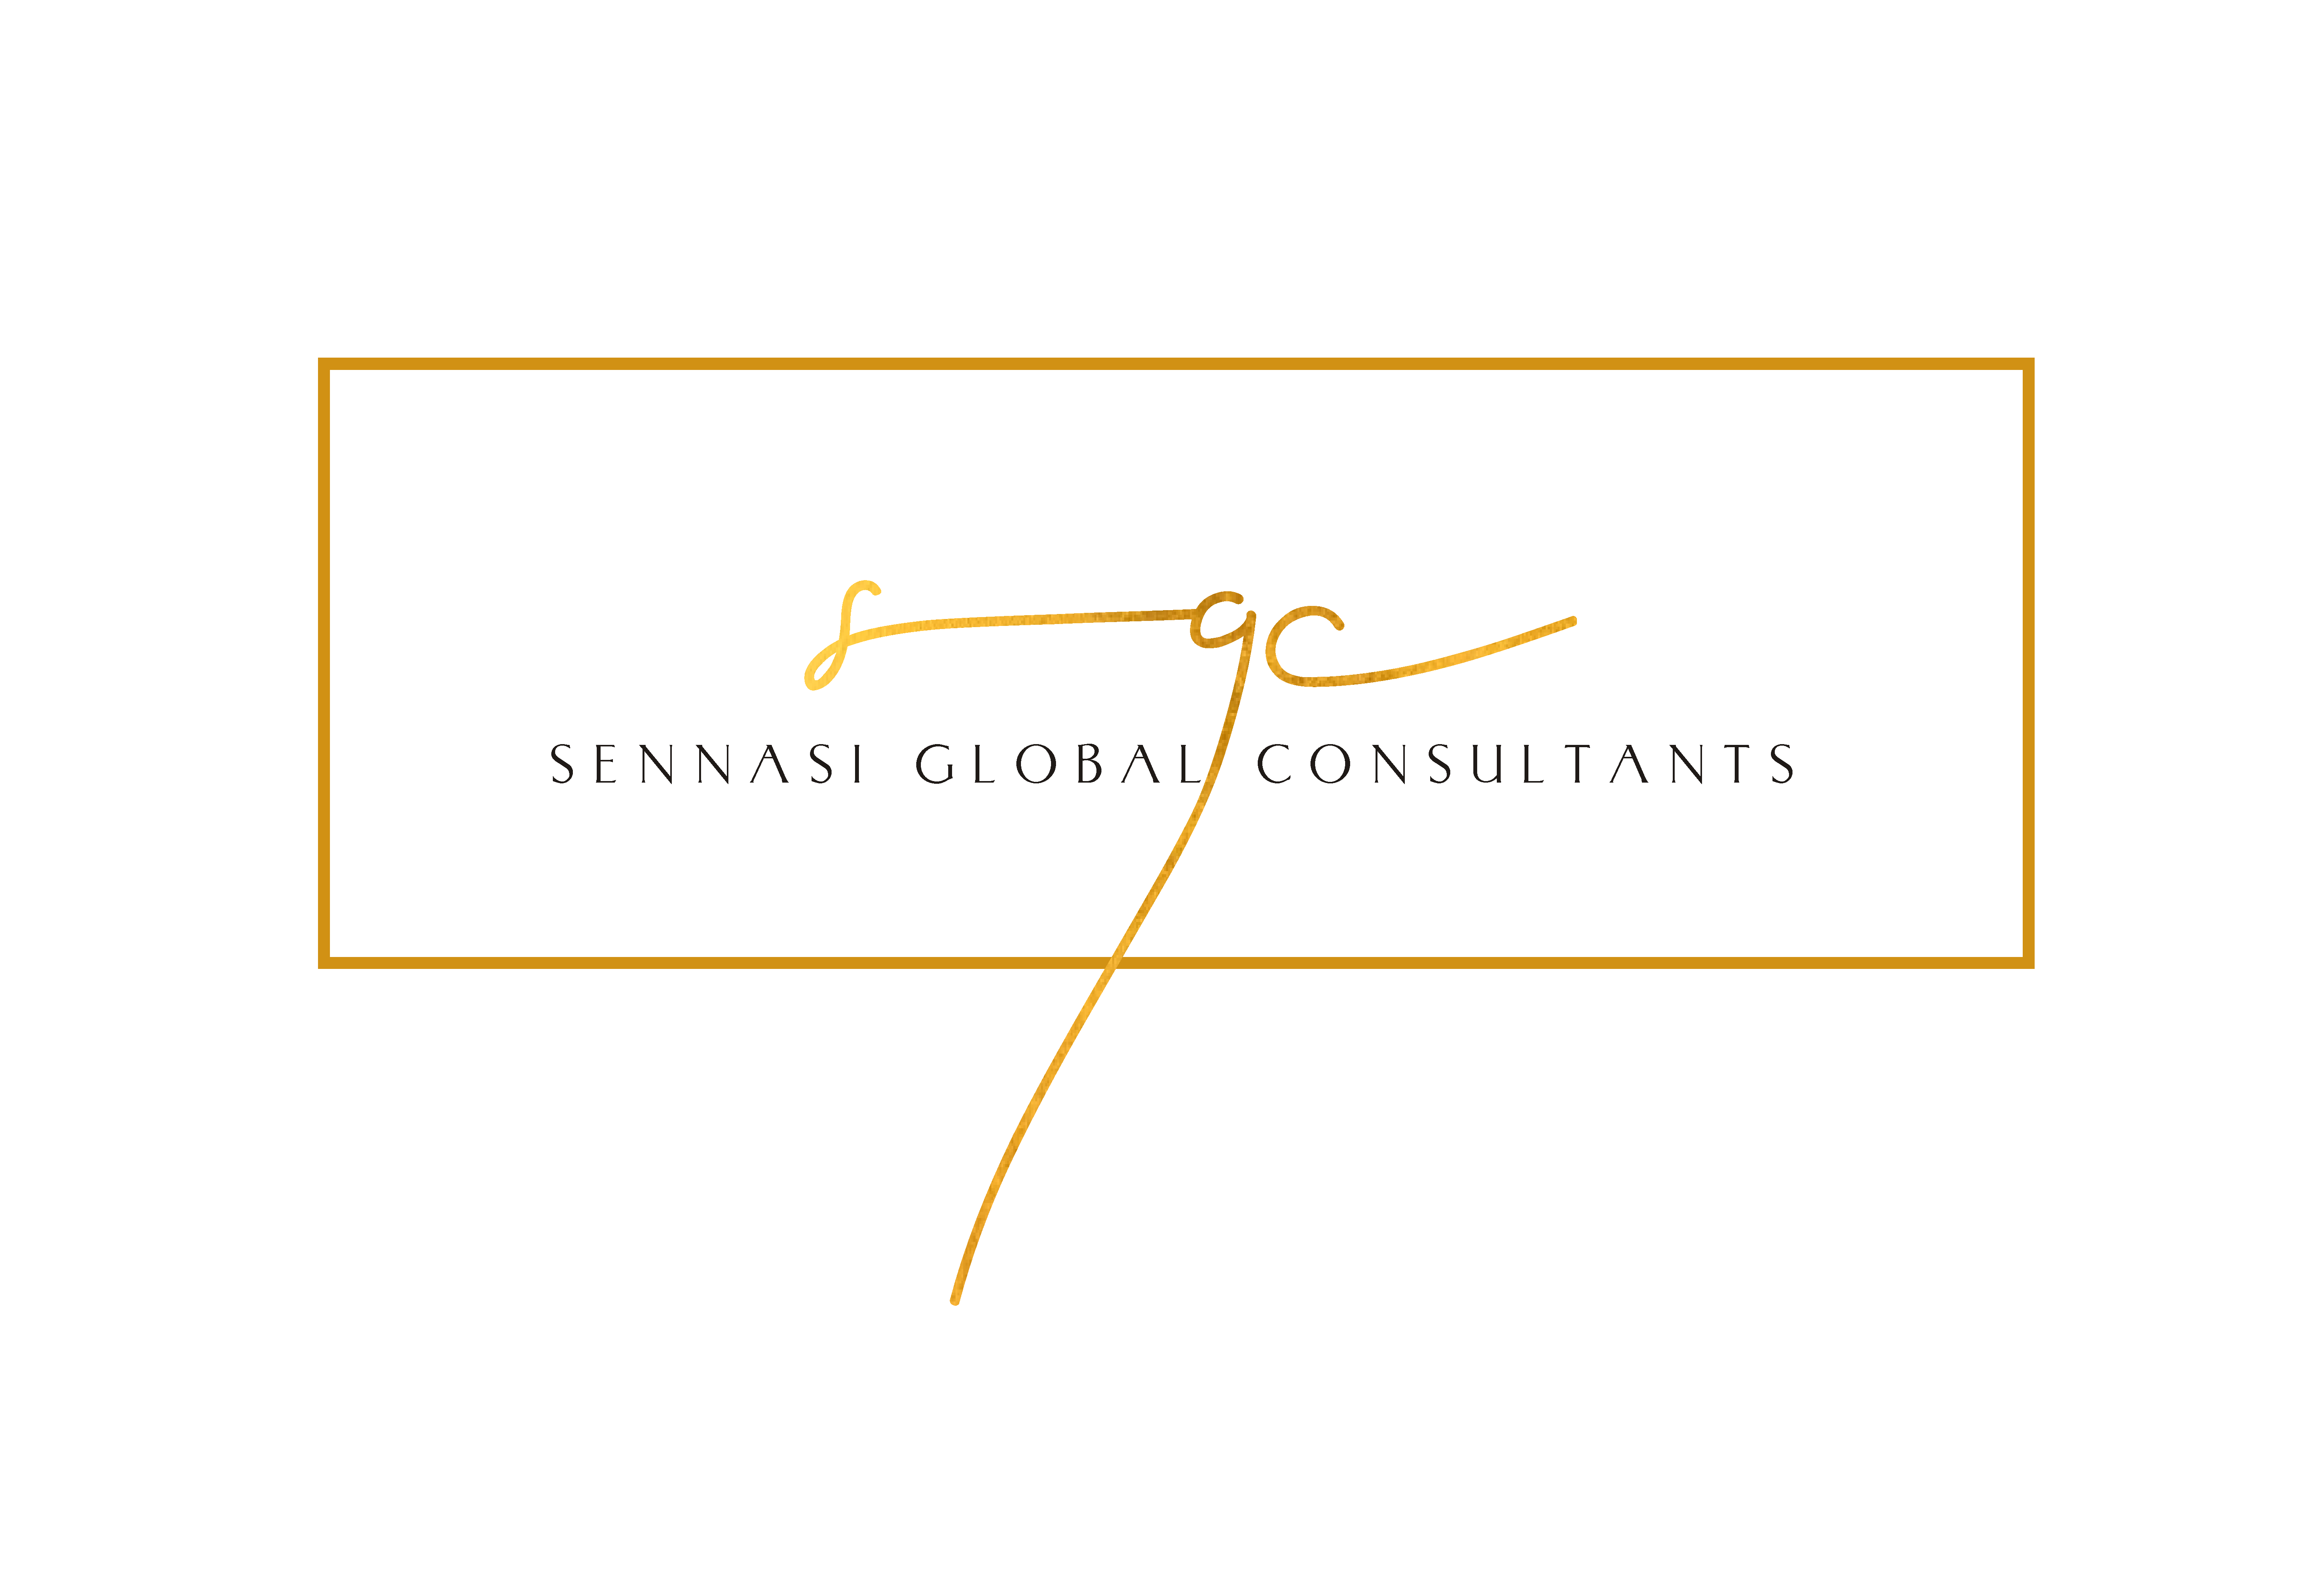 sennasi global consultants